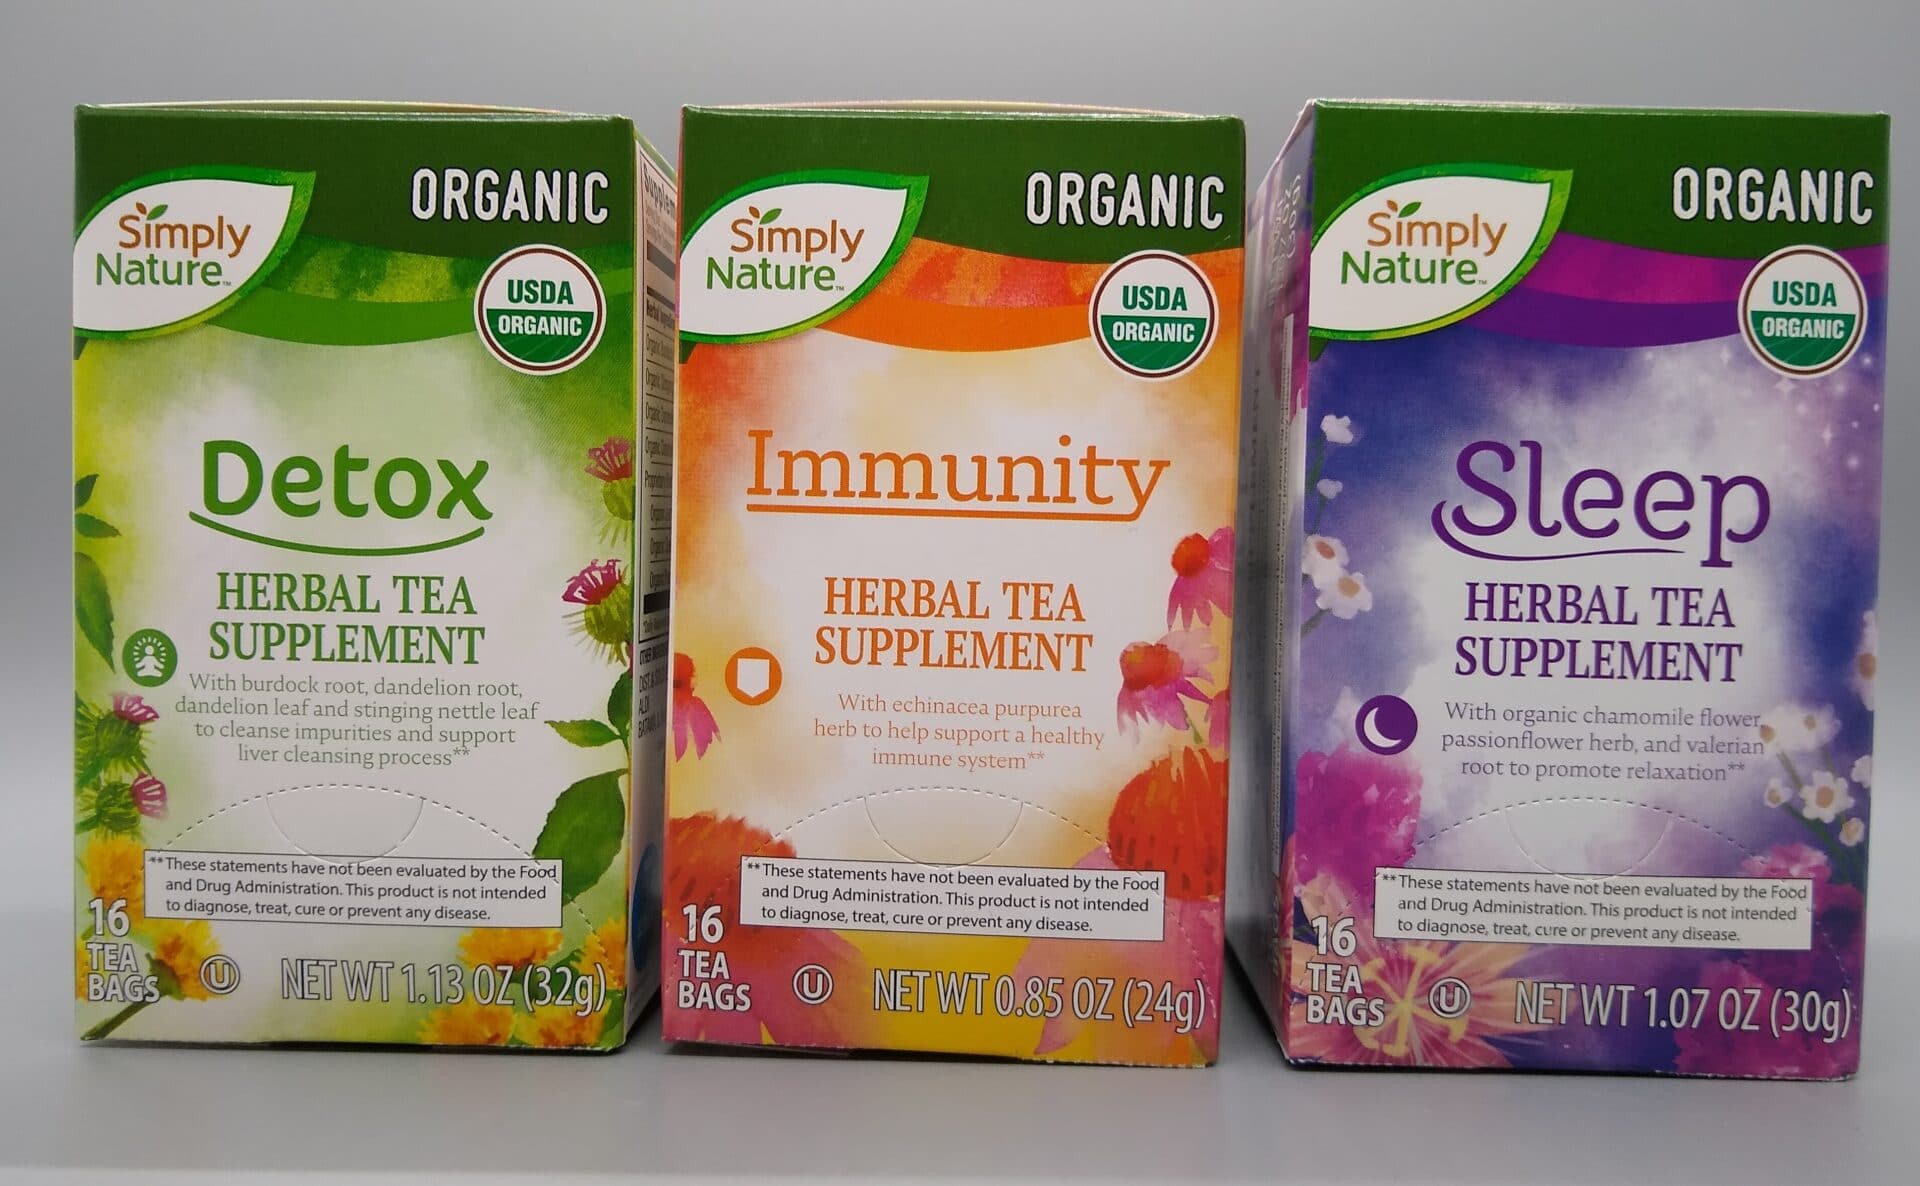 Simply Nature Organic Herbal Tea Supplement